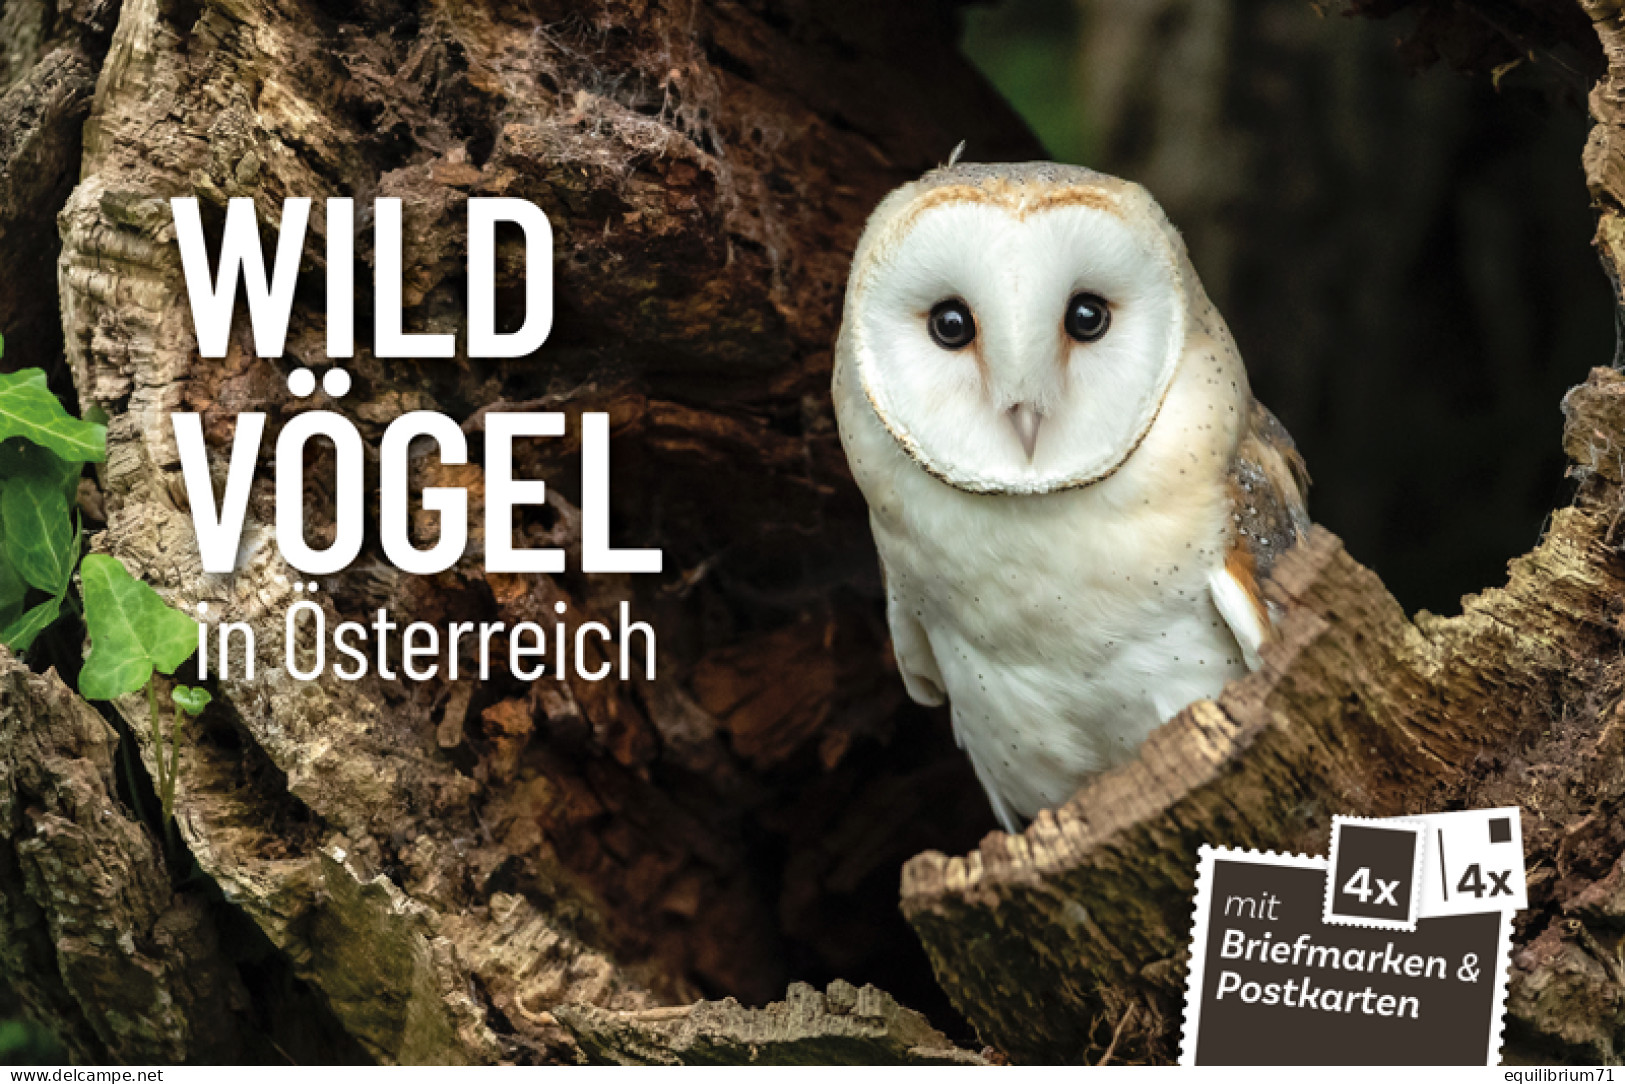 Autriche** - Carnet/Boekje + 4 CP/PK - Oiseaux Sauvages En Autriche/Wilde Vogels In Oostenrijk/Wildvögel In Österreich - Oies